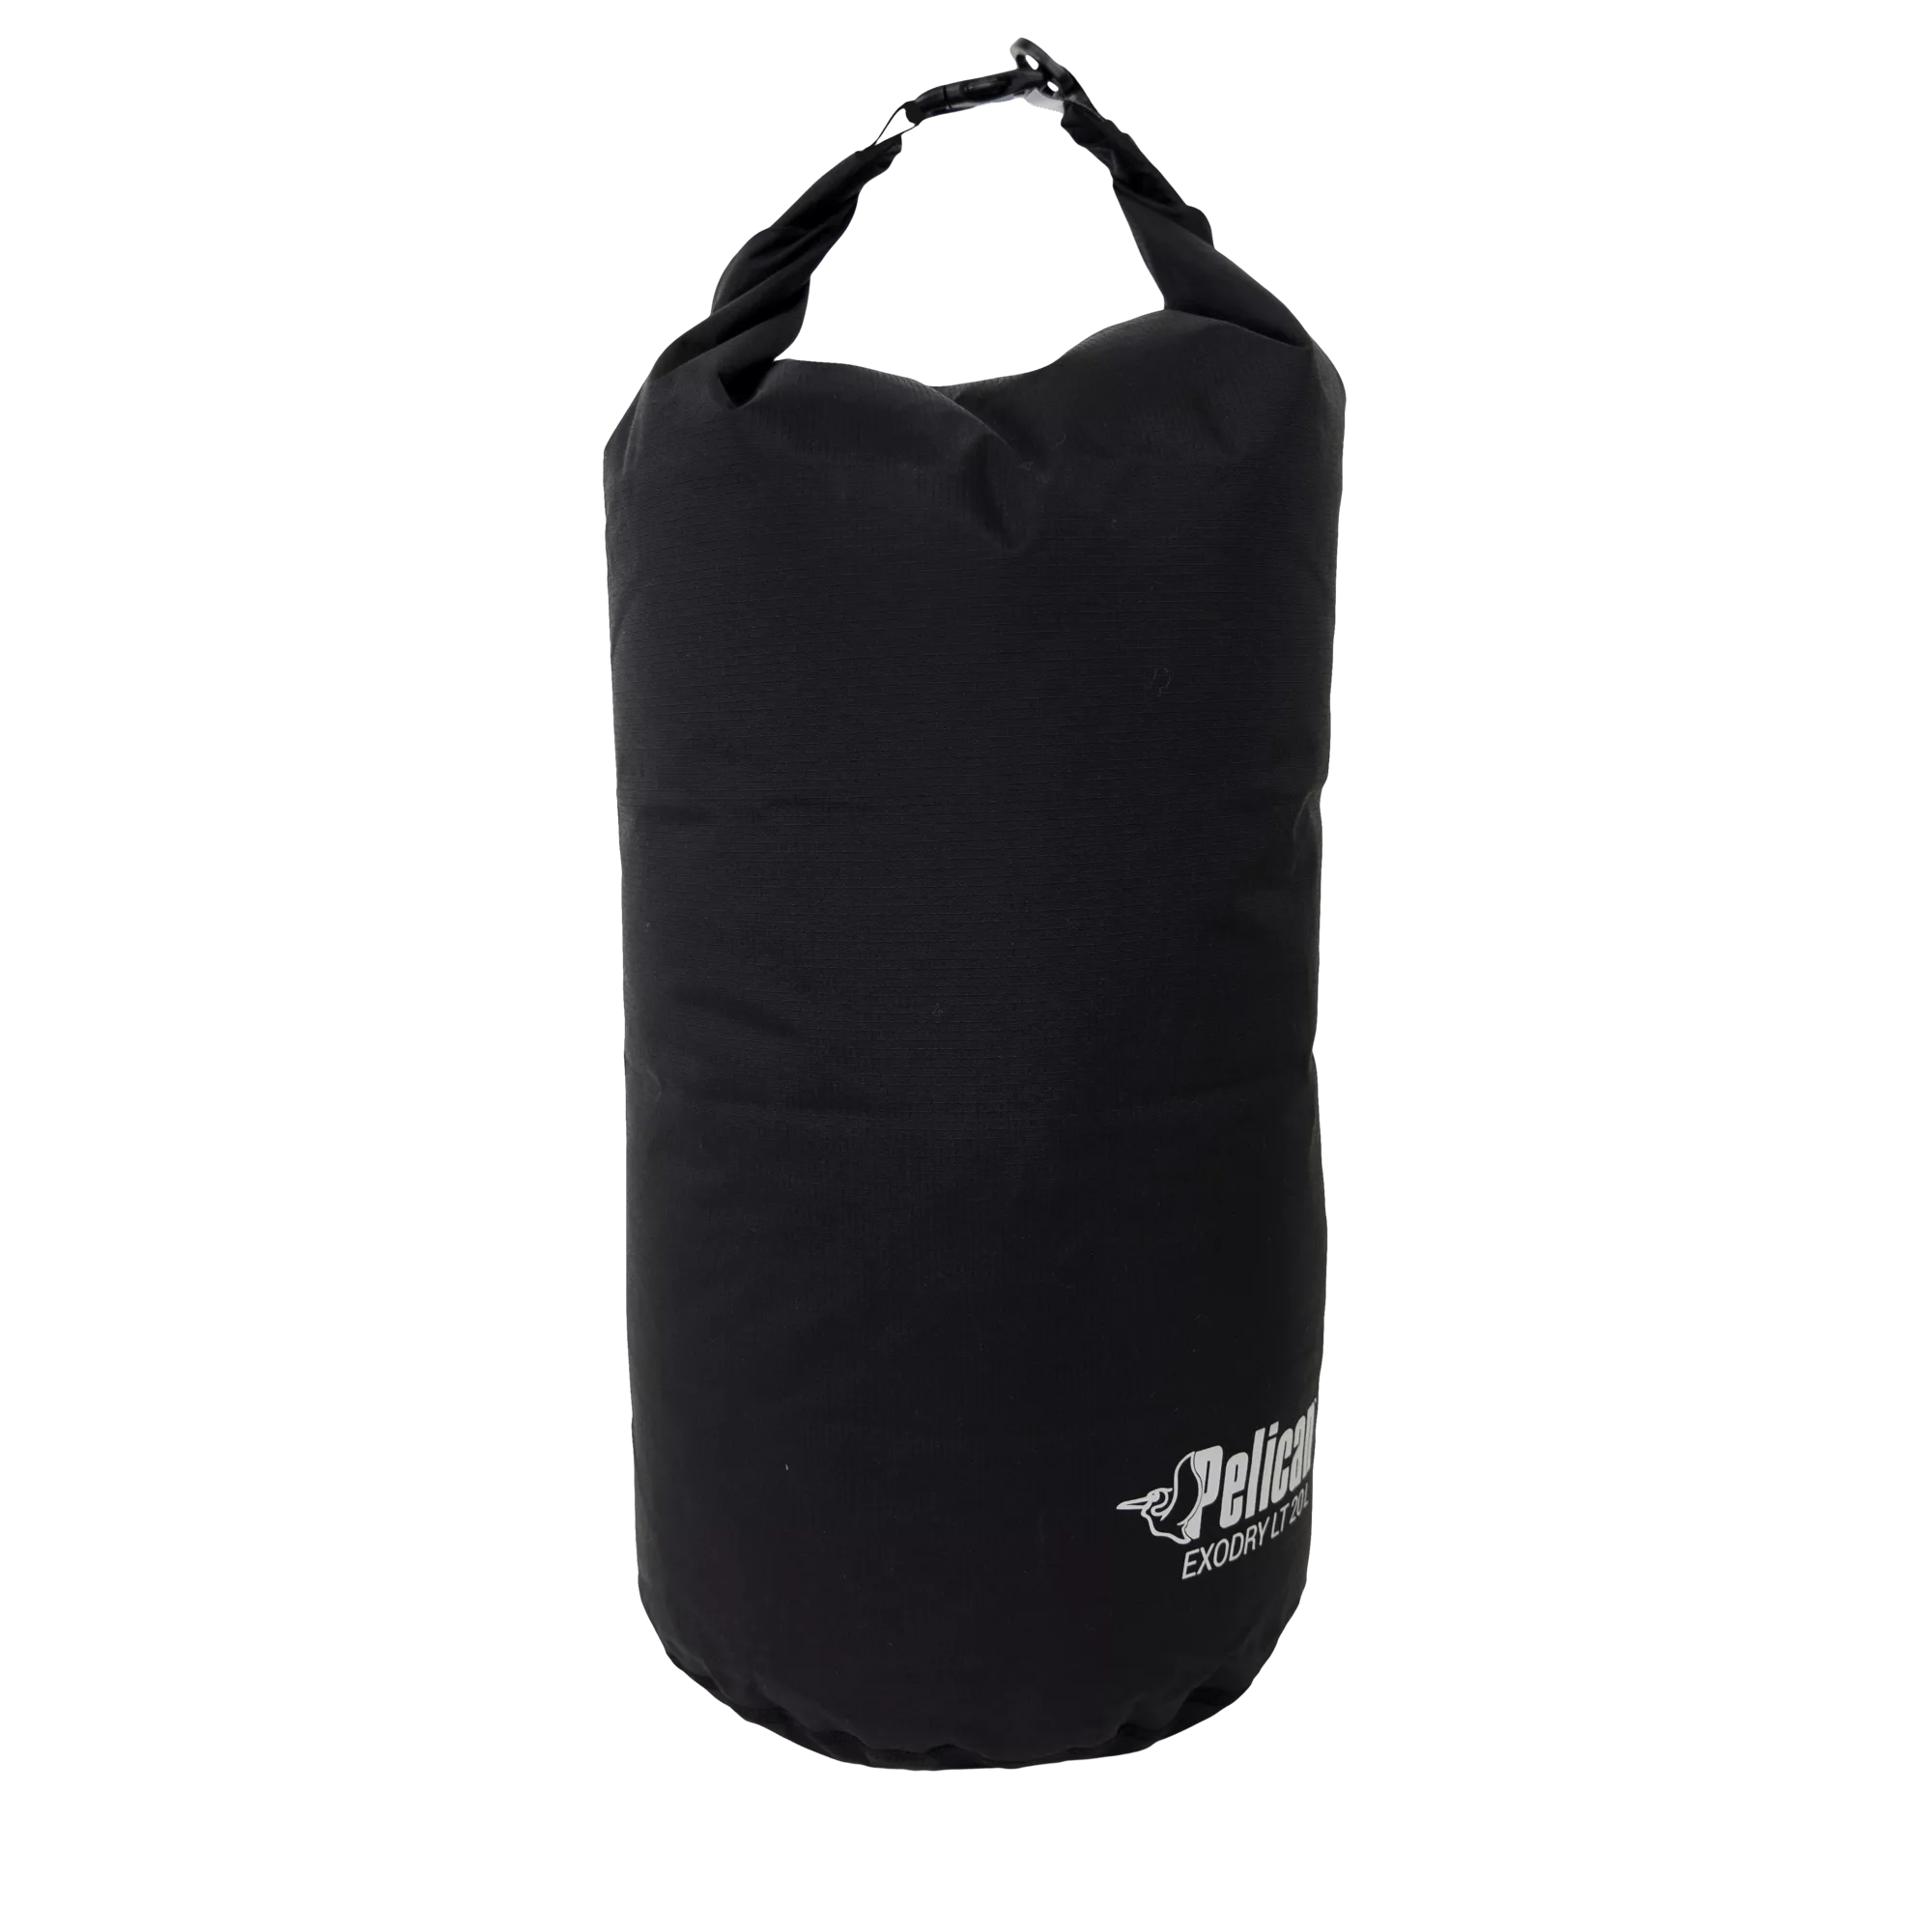 PELICAN - Exodry LT 20L Dry Bag - Black - PS1995-00 - ISO